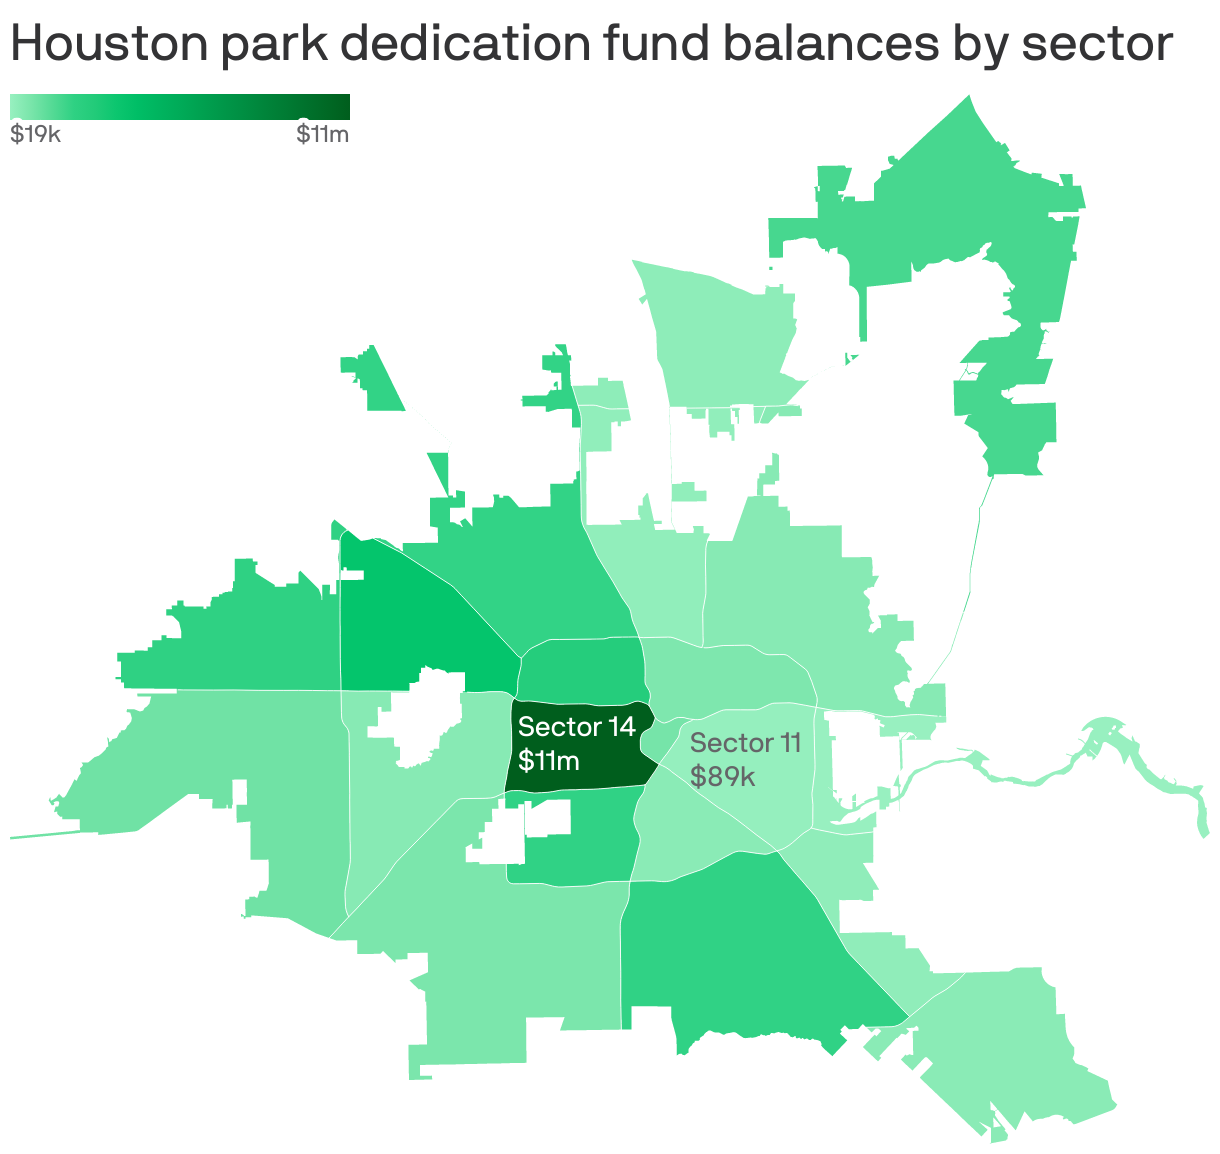 Houston park dedication fund balances by sector